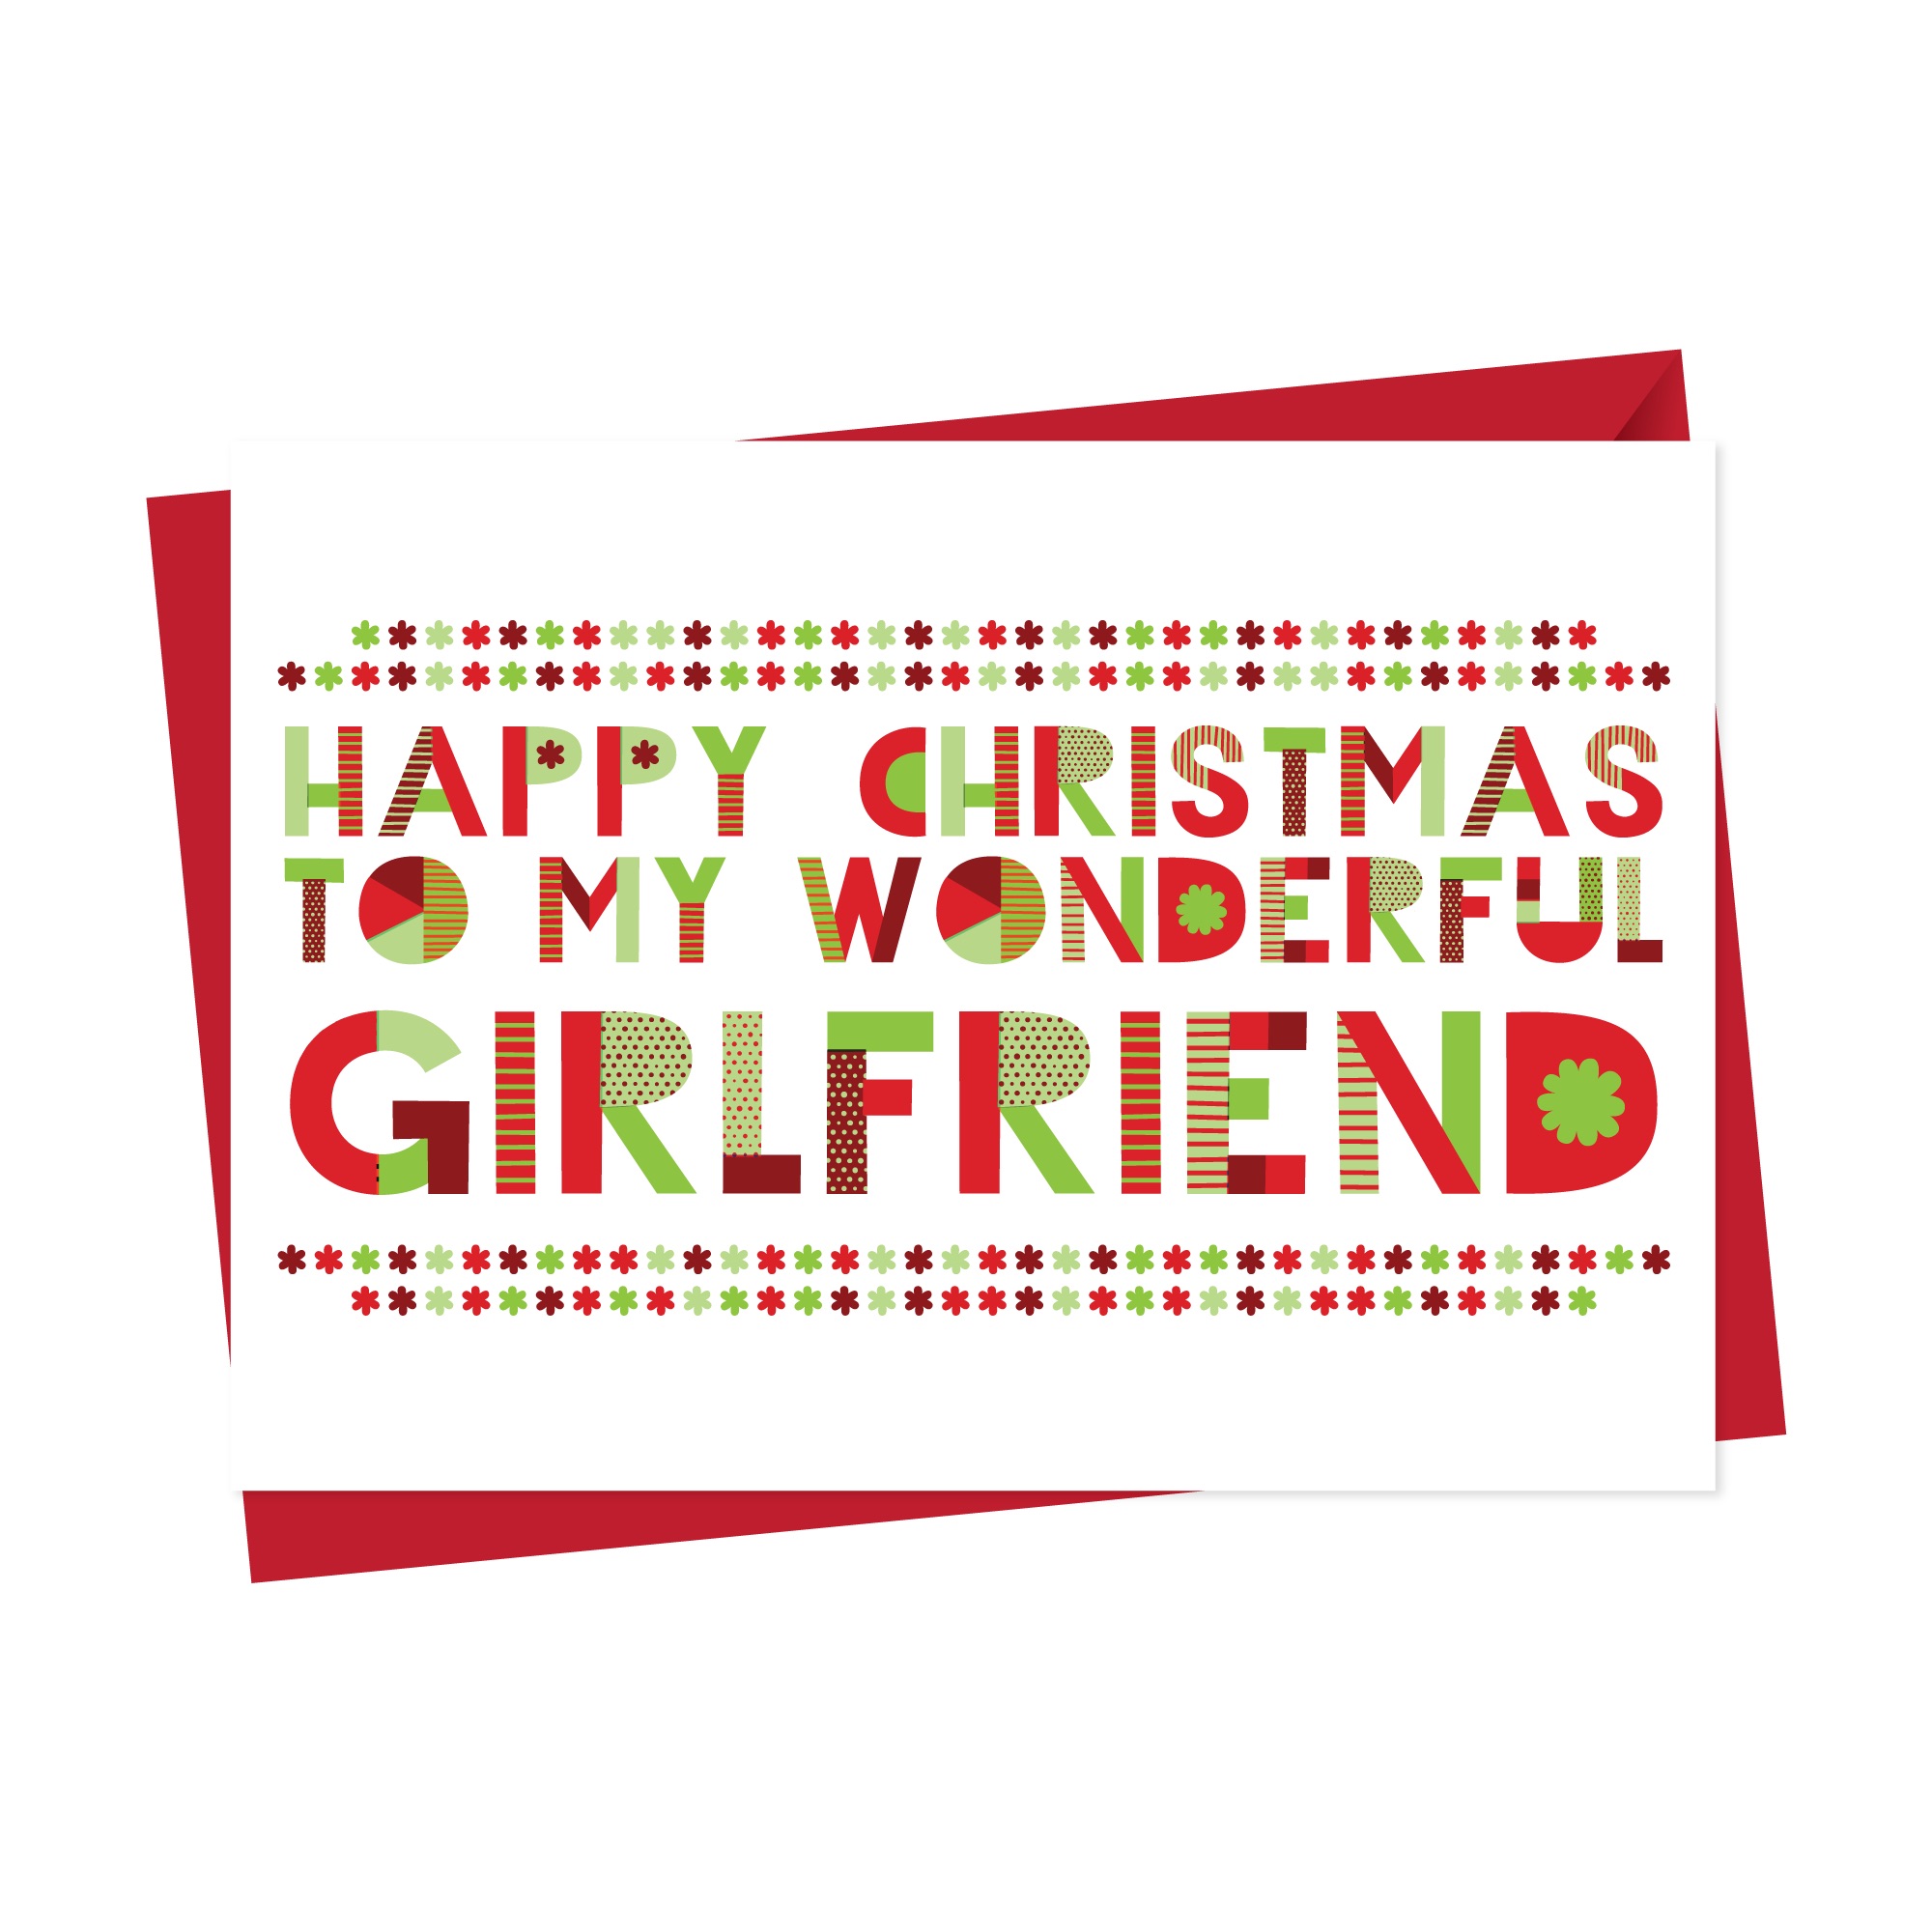 Wonderful Girlfriend Christmas Card